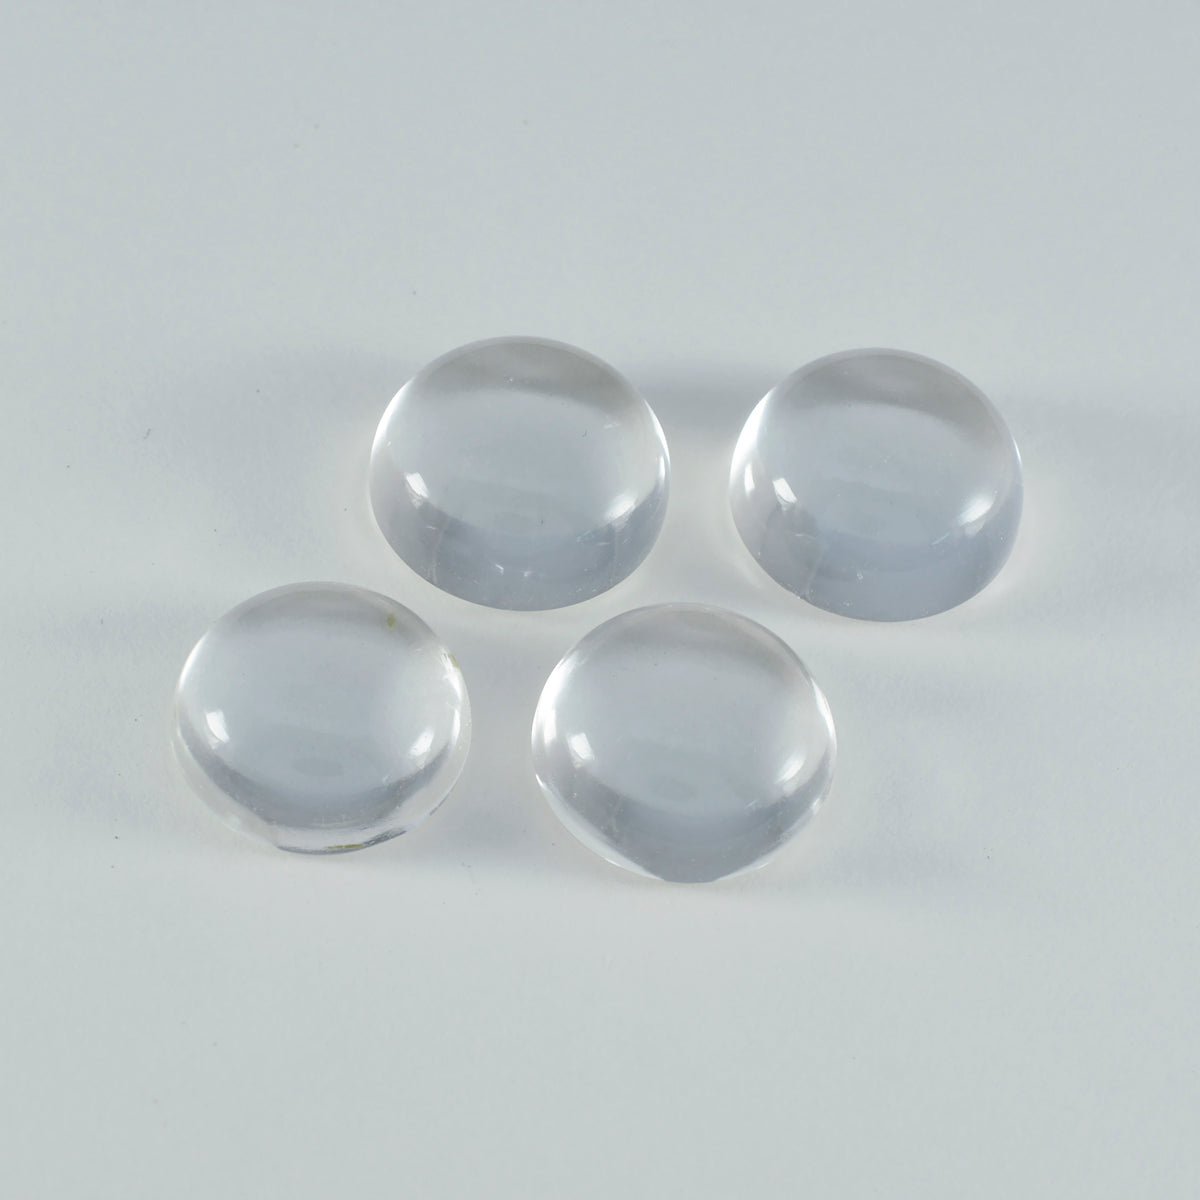 riyogems 1pc ホワイト クリスタル クォーツ カボション 14x14 mm ラウンド形状ハンサム品質ルース宝石